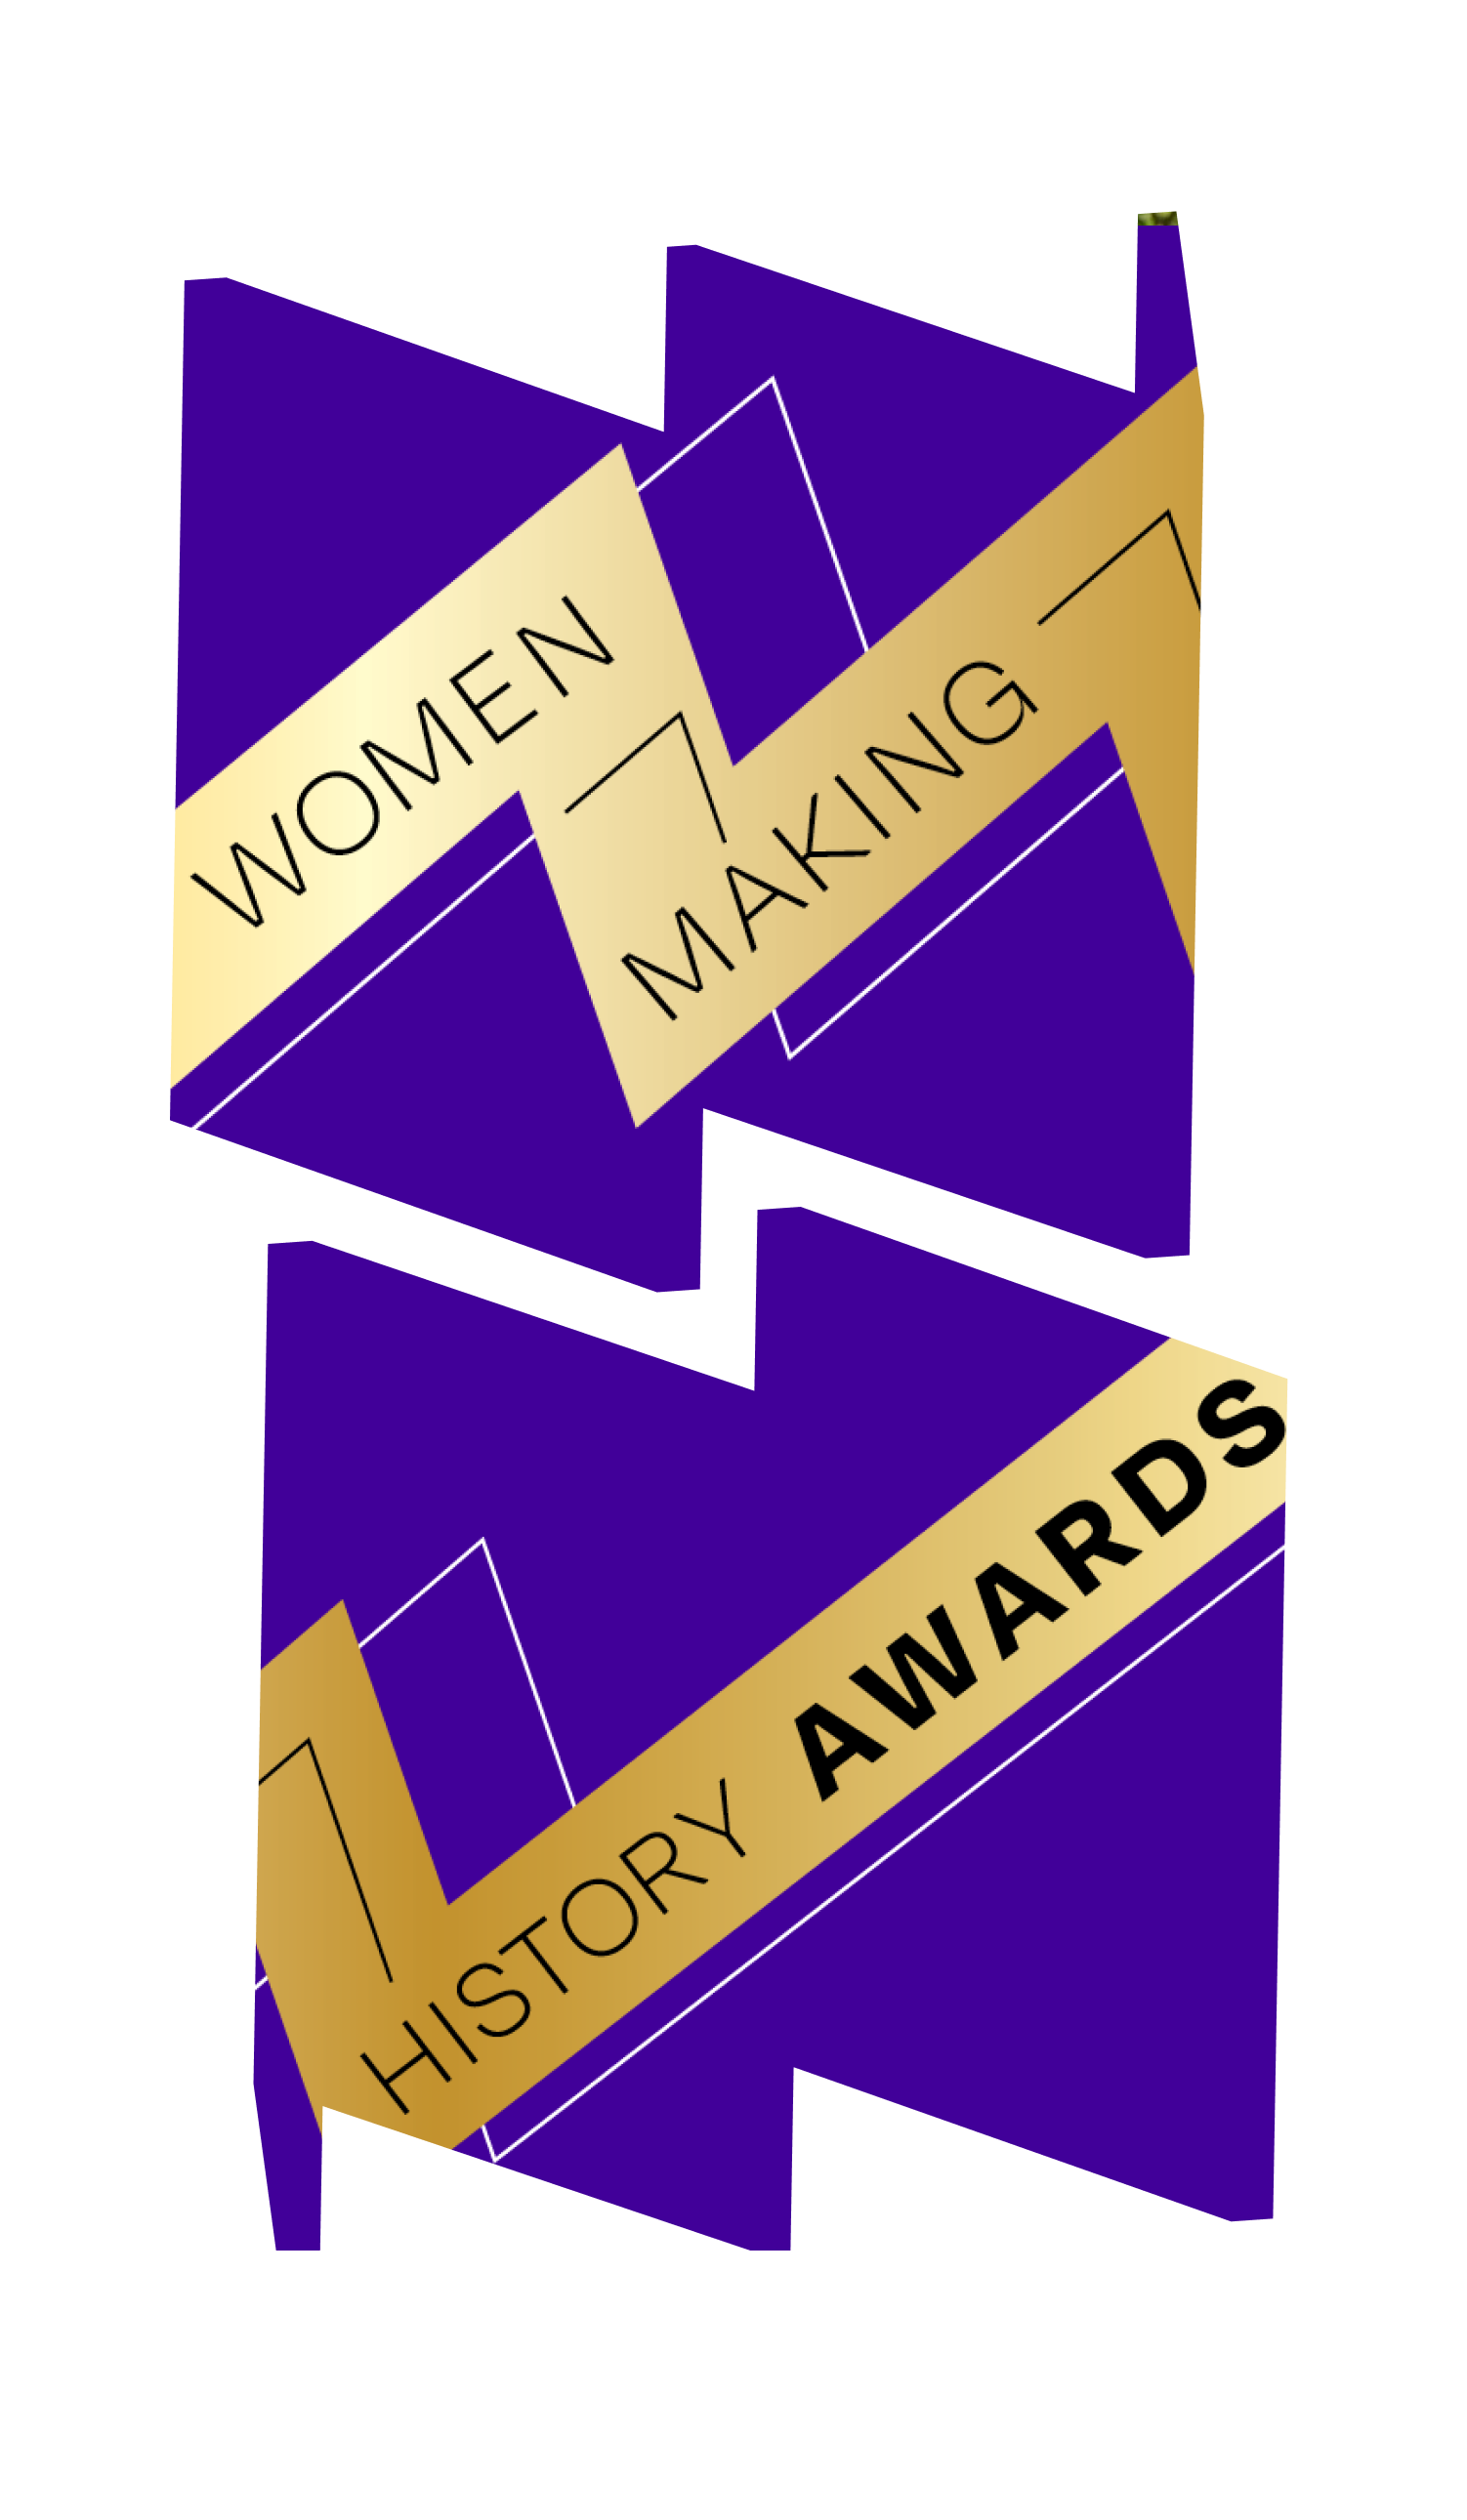 Text on gold ribbon says "Women Making History Awards"